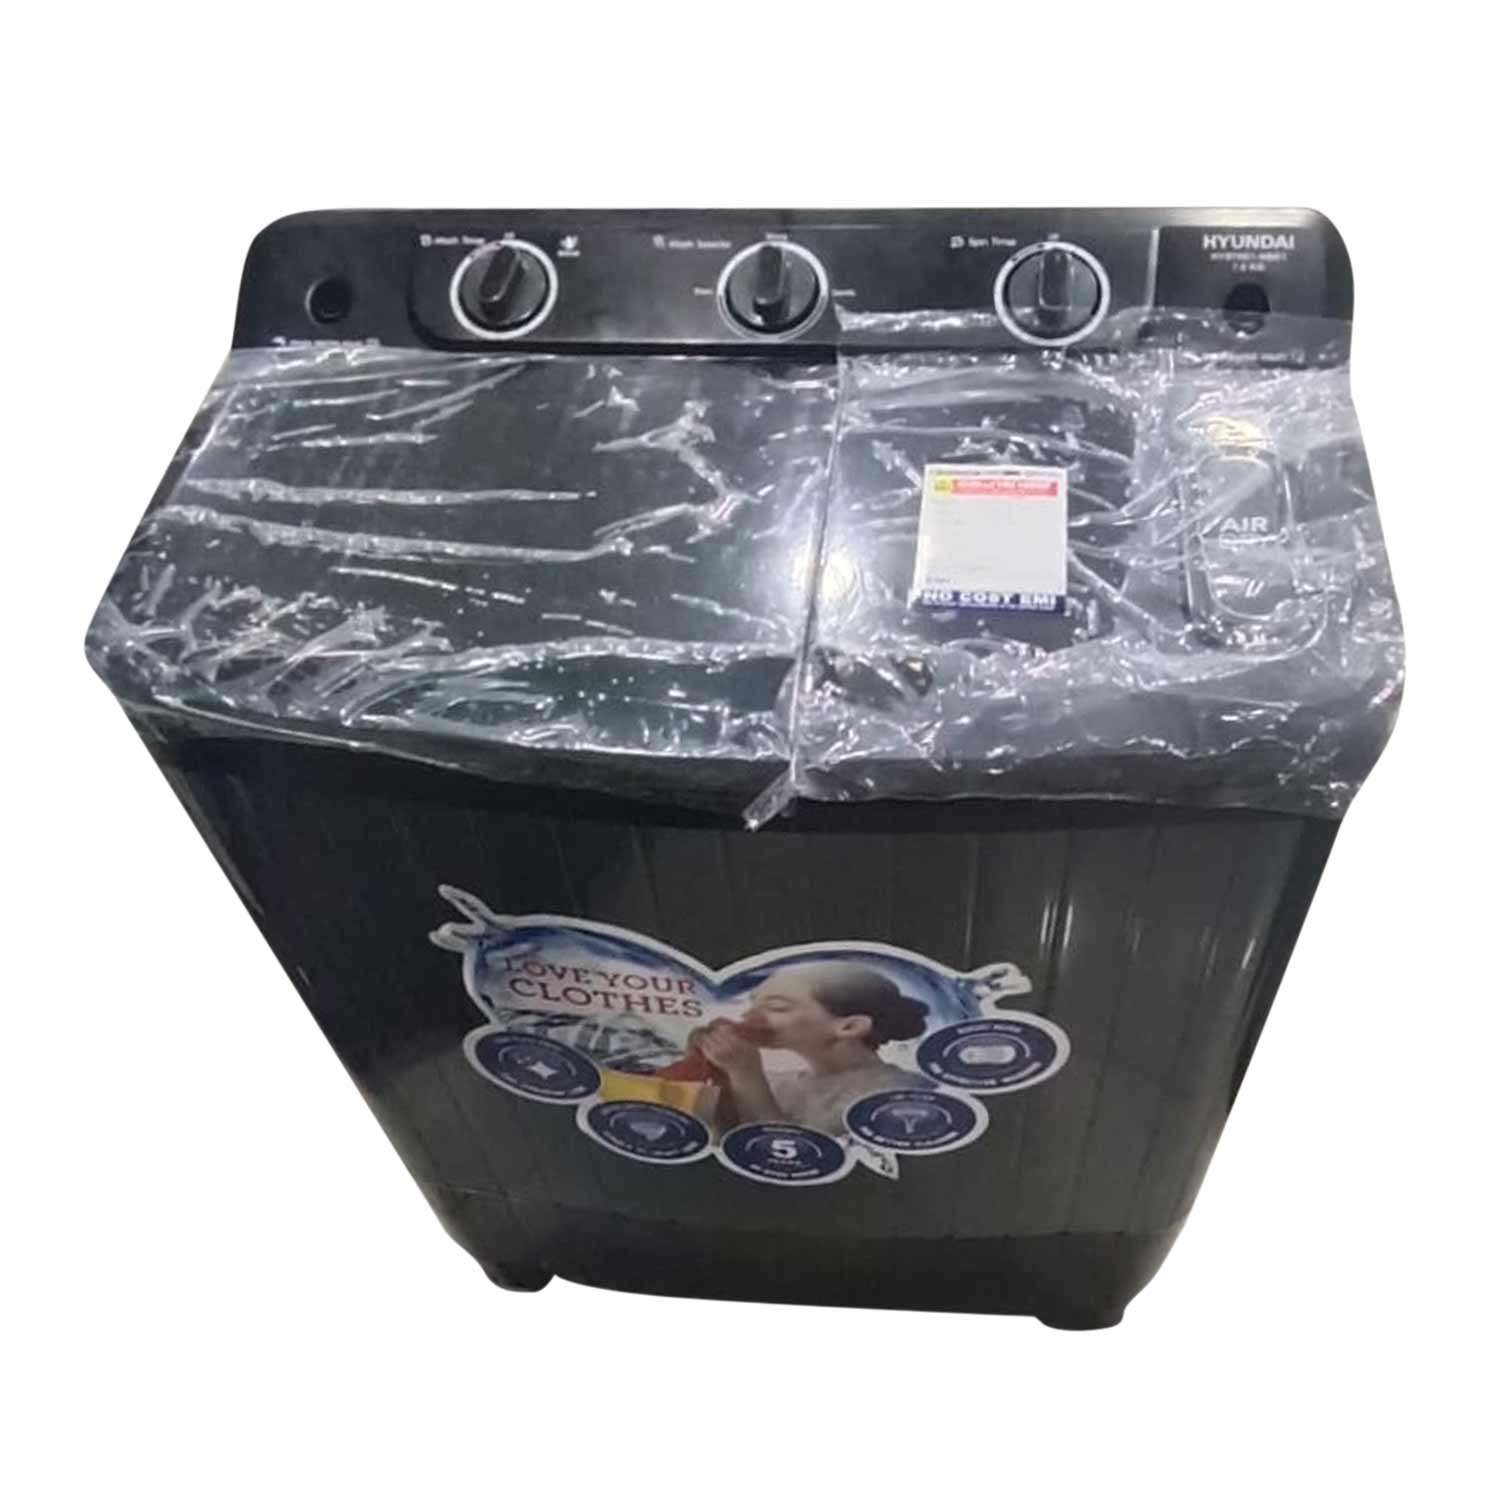 HYUNDAI 7 kg Semi Automatic Top Load Washing Machine HYS 70D1-NBE1 NERO BLACK